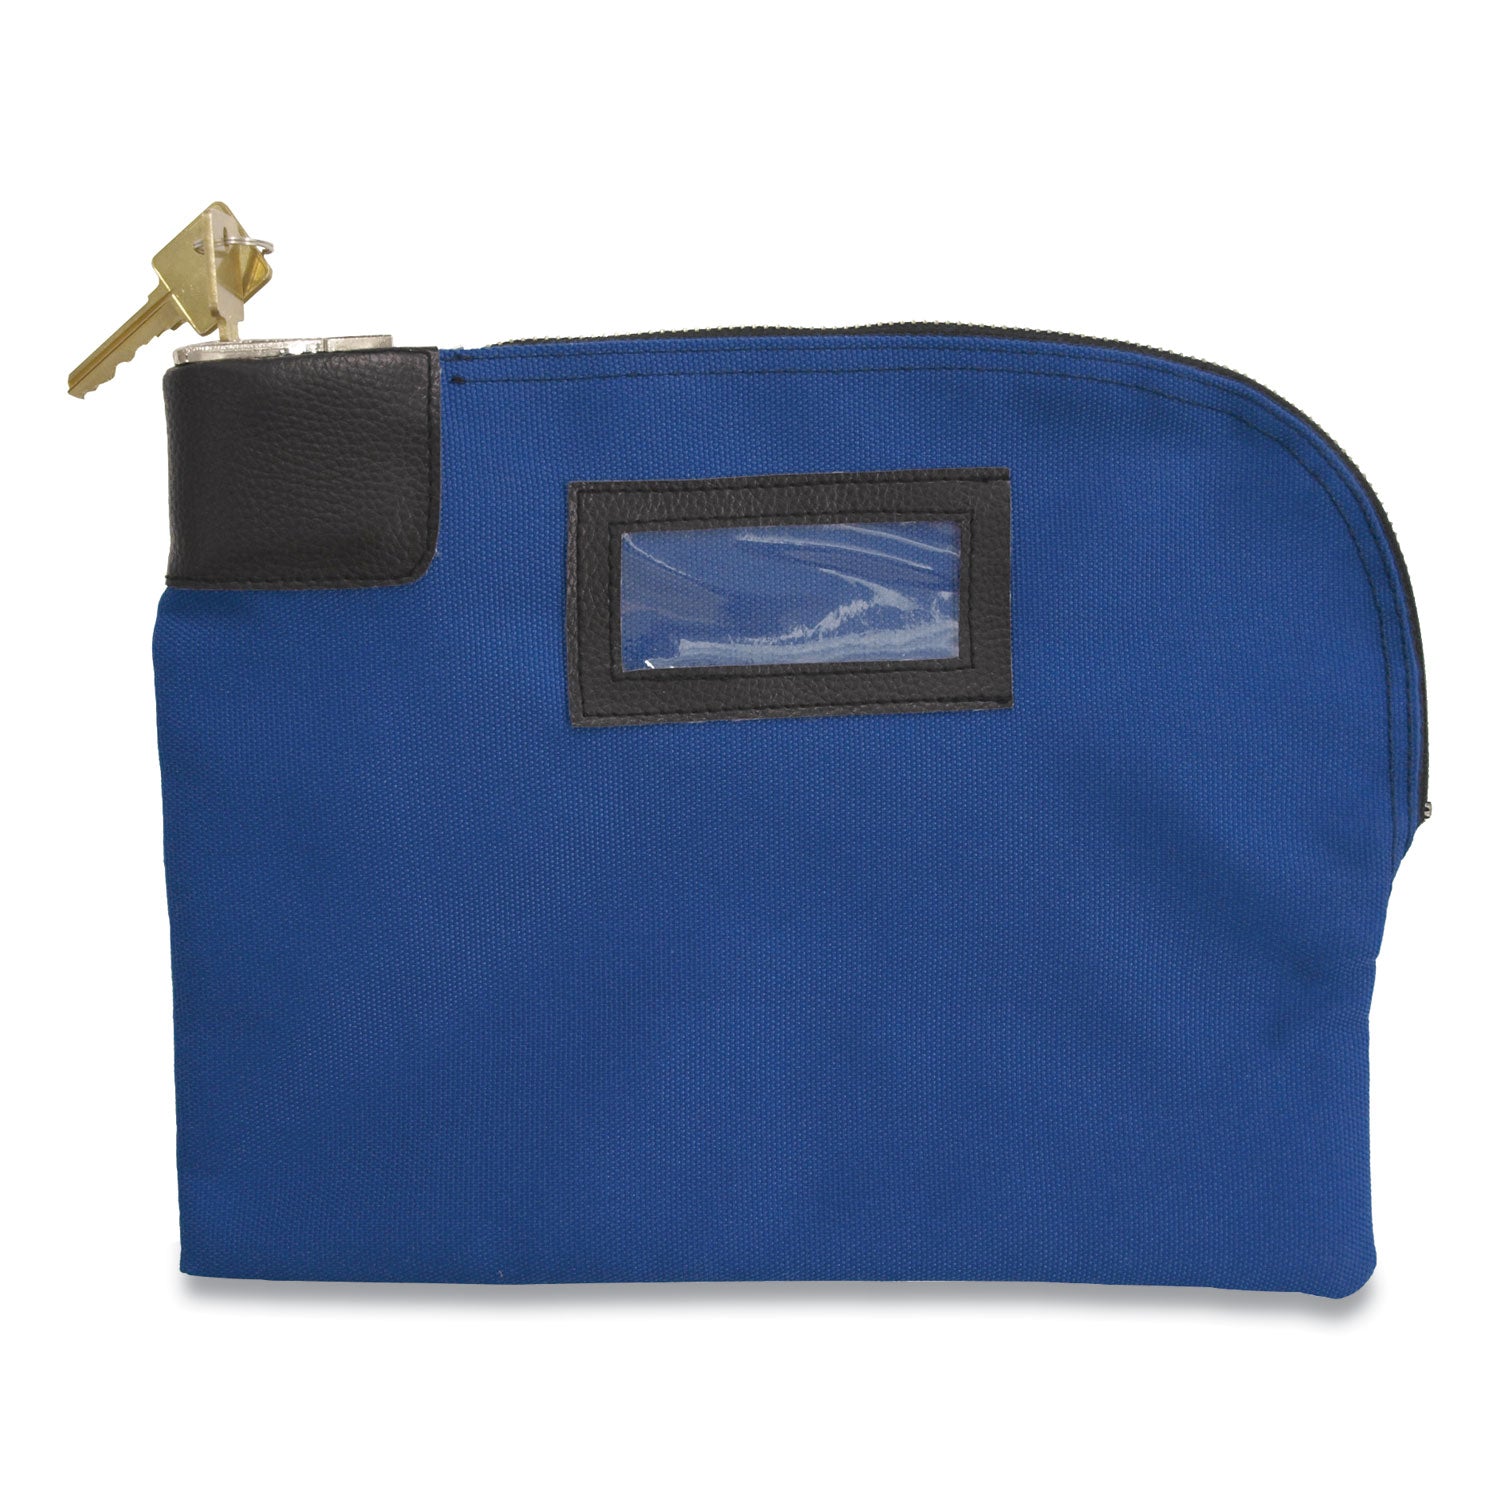 fabric-deposit-bag-locking-canvas-85-x-11-x-1-blue_cnk530312 - 1